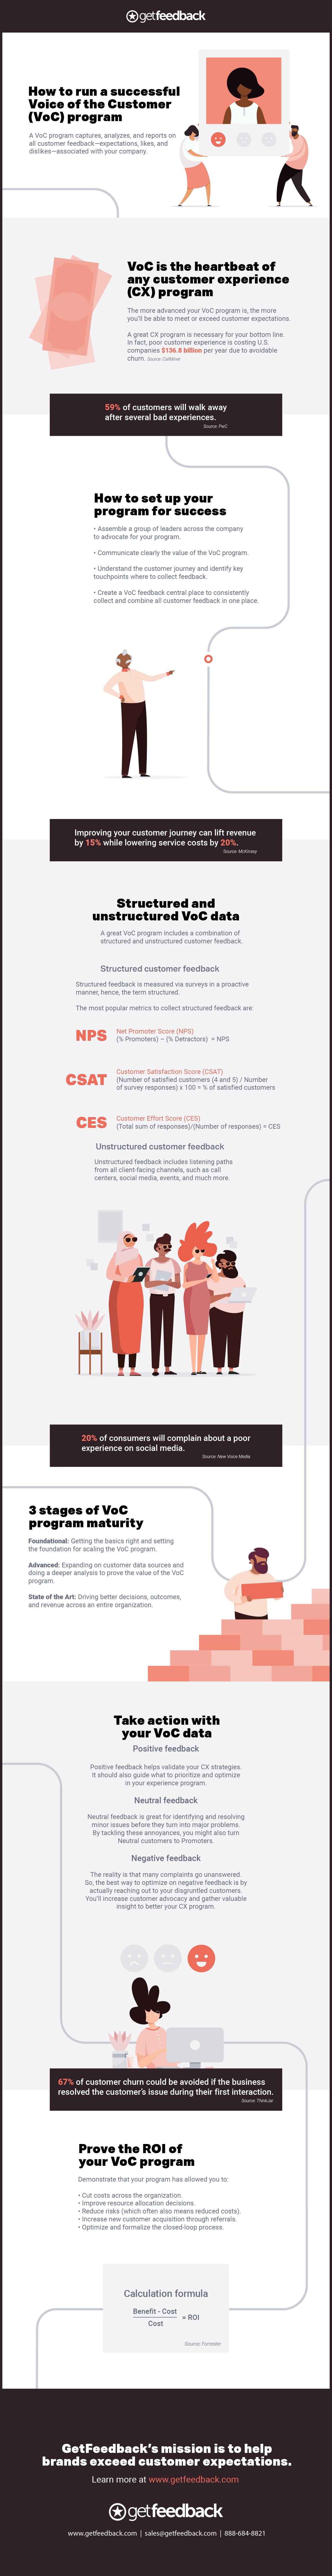 Voice of the Customer Program Infographic